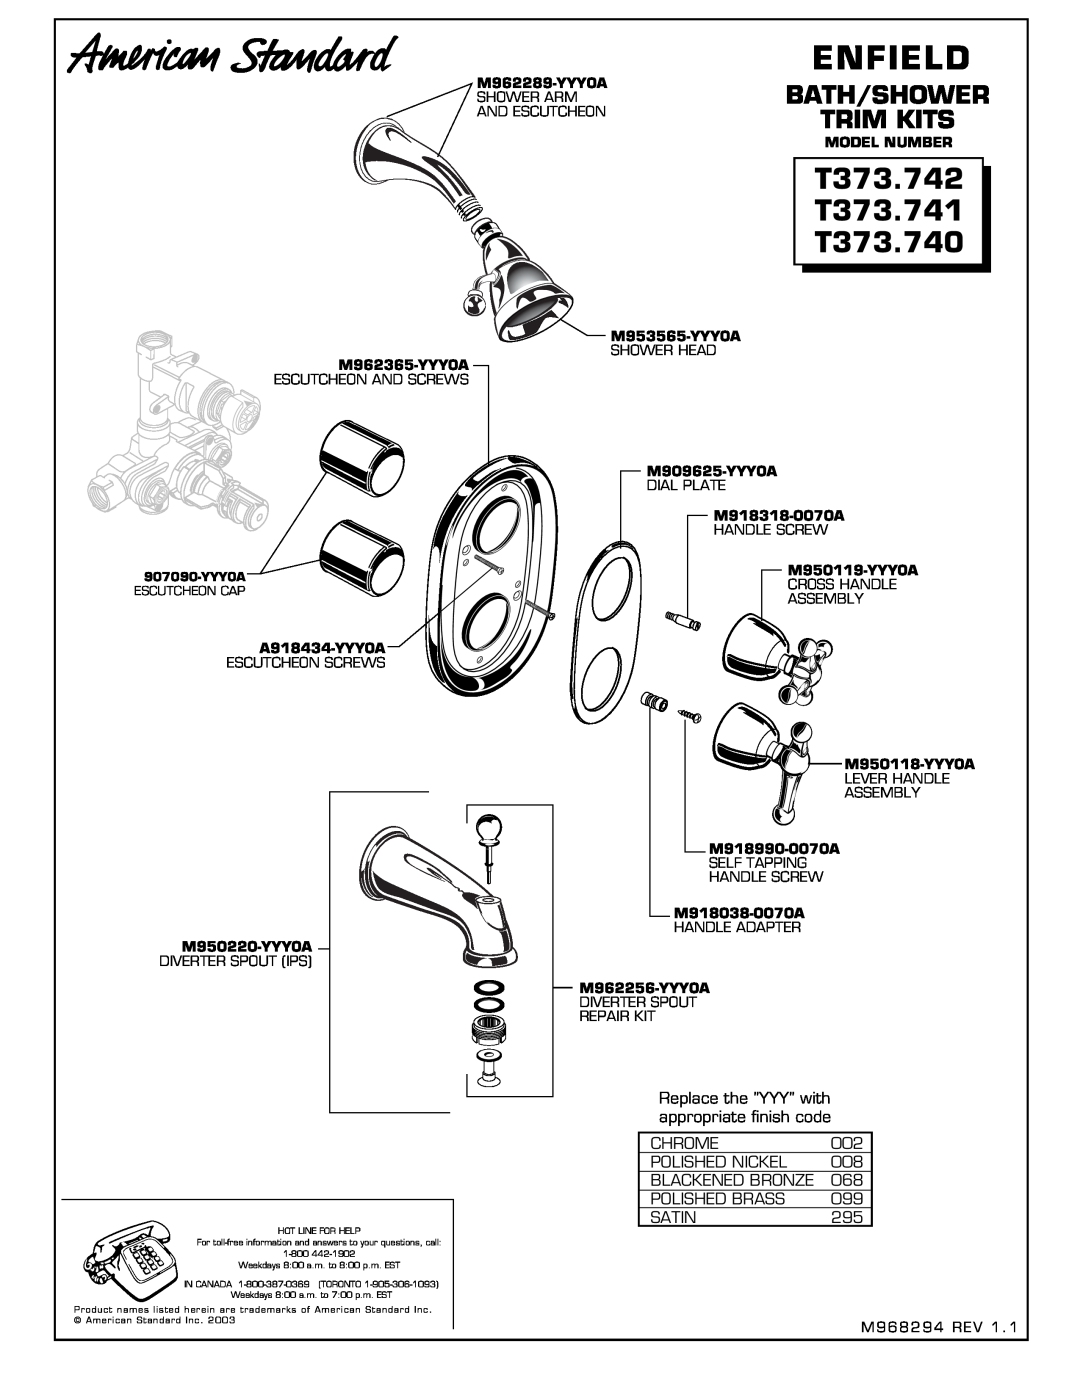 American Standard installation instructions Enfield, T373.742 T373.741 T373.740, Bath/Shower Trim Kits 